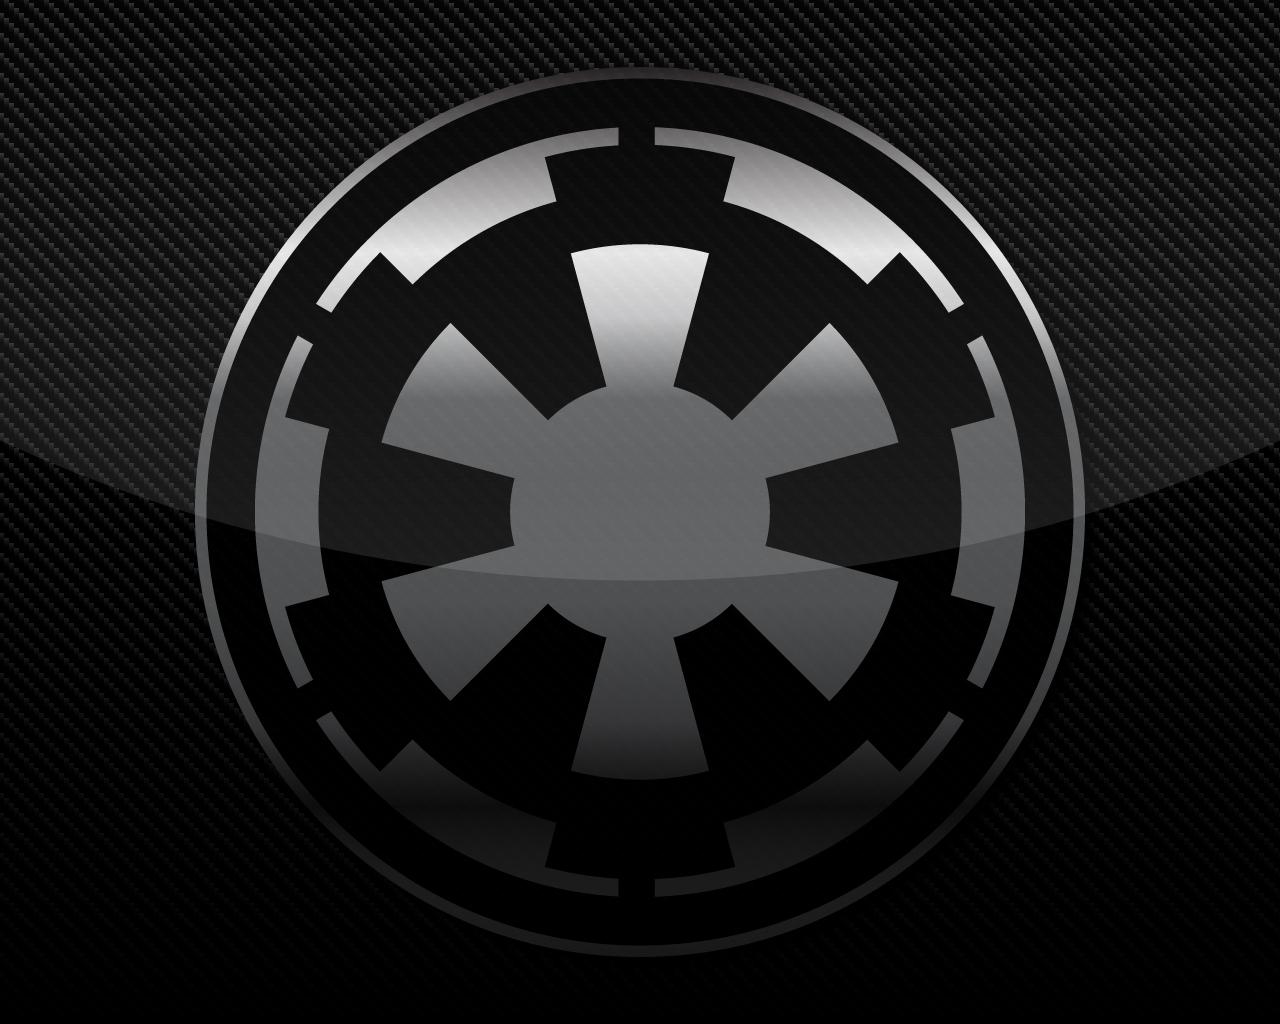 Download 1280x1024 Star wars logos galactic emp wallpaper